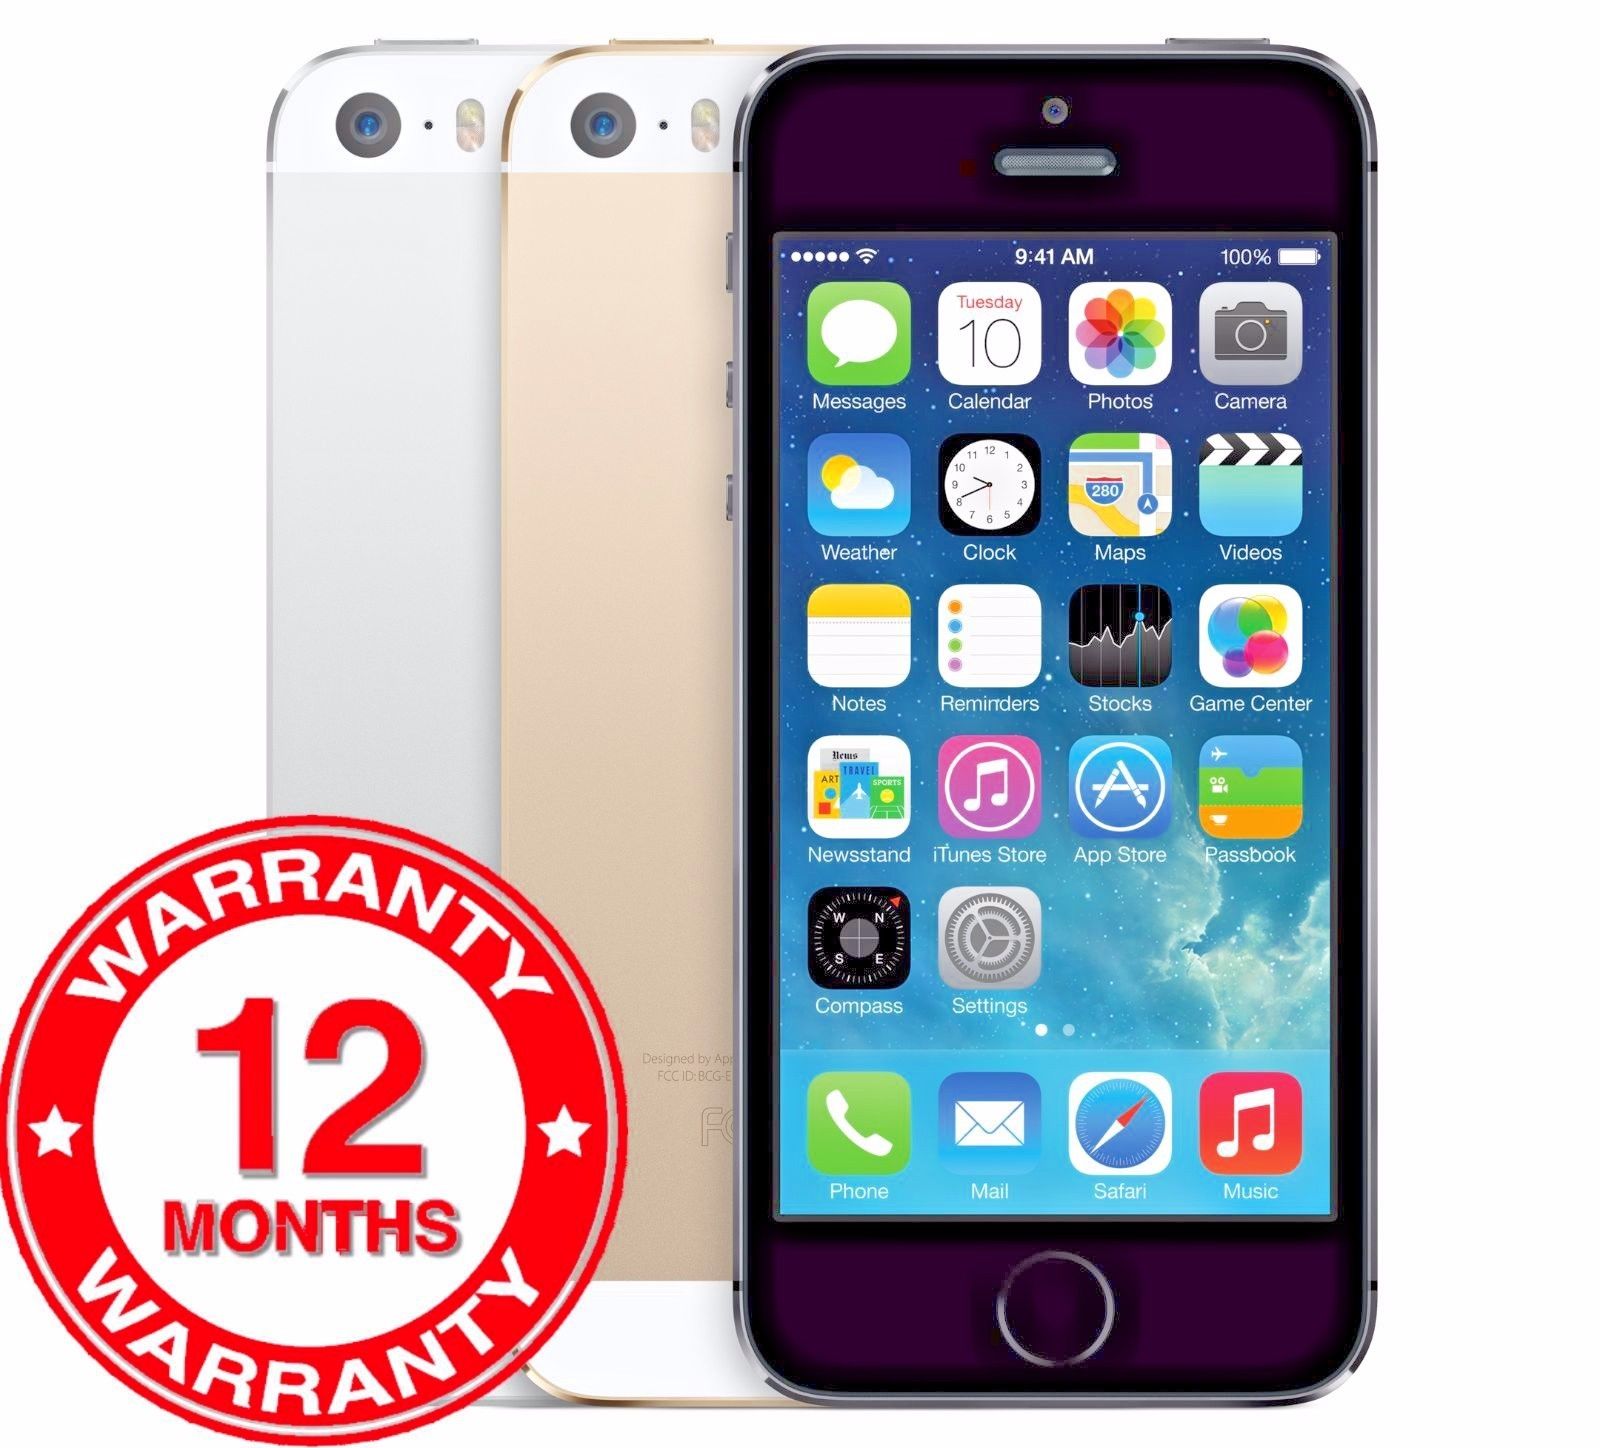 Apple iPhone 5s - 16GB 32GB 64GB - Unlocked SIM Free Smartphone All Colours